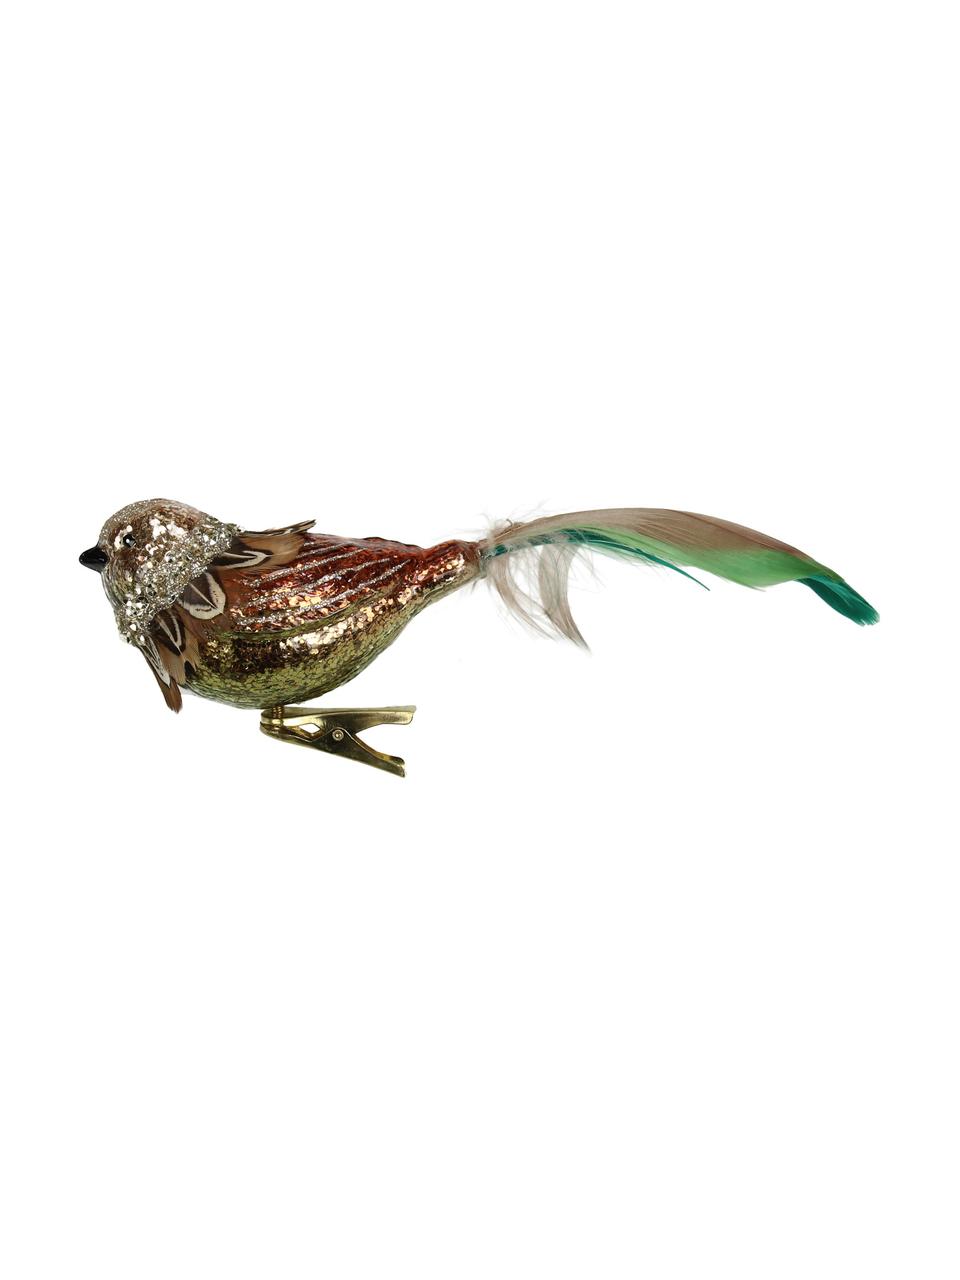 Baumanhänger Bird, Mehrfarbig, 19 x 8 cm